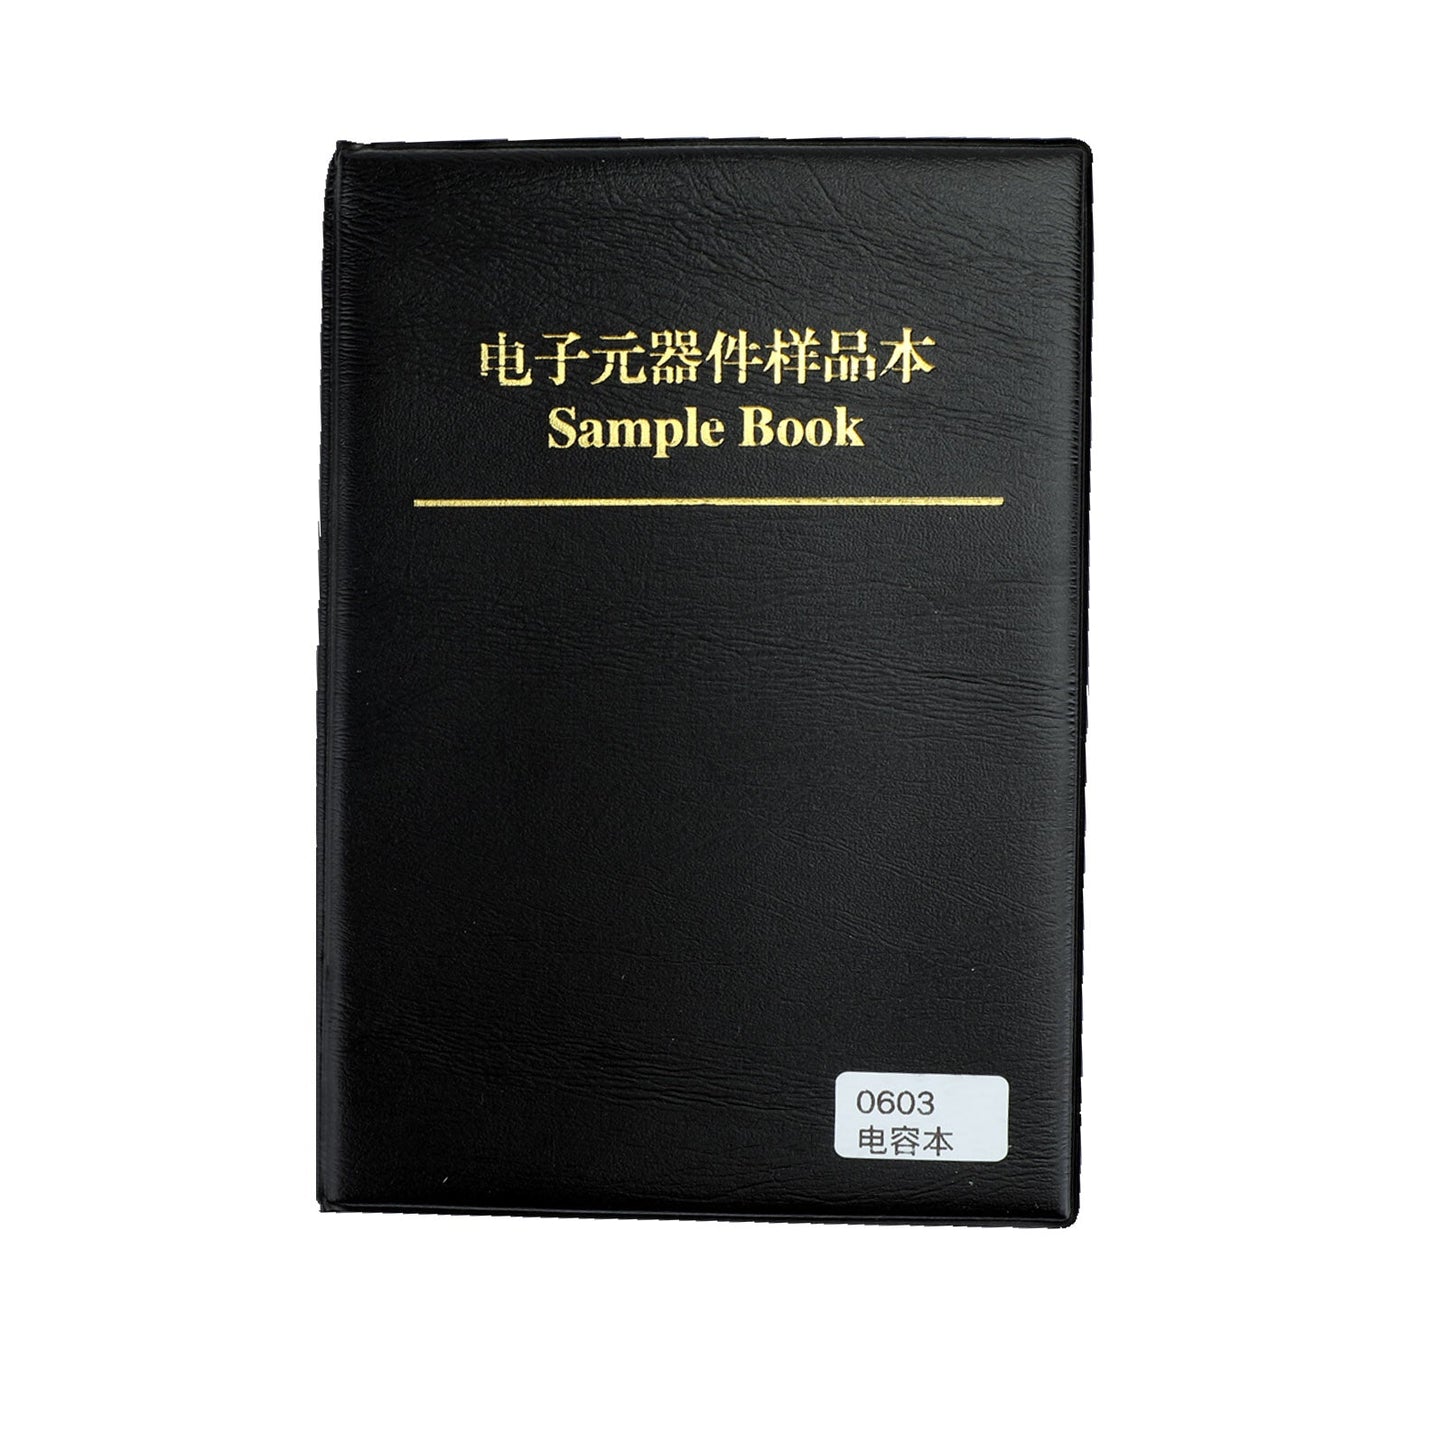 SMD0603 Capacitor sample book 90 values * 50pcs=4500pcs Capacitor kit SMD